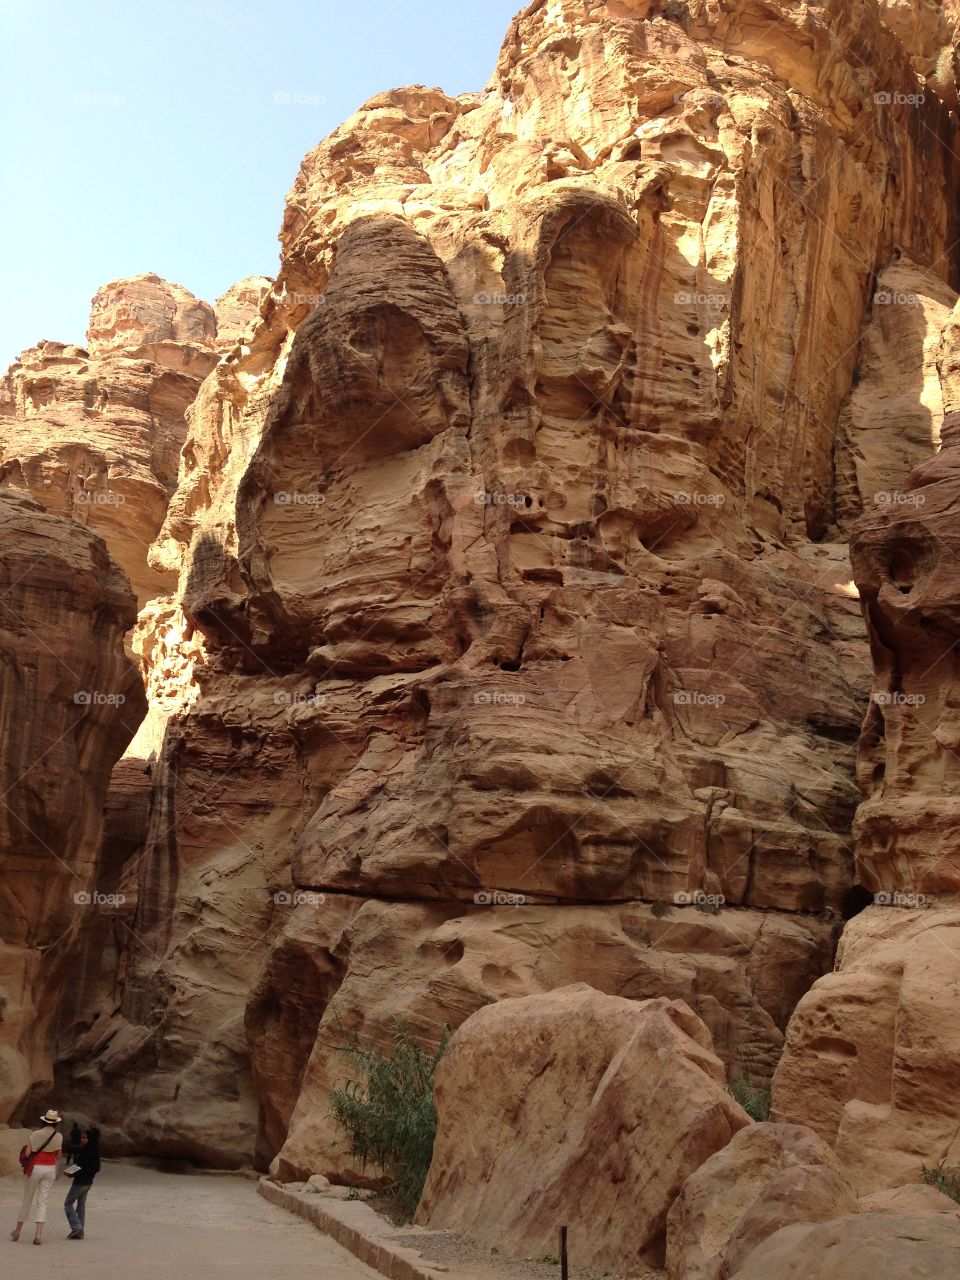 Gorgeous rock formations in Petra,
Jordan.